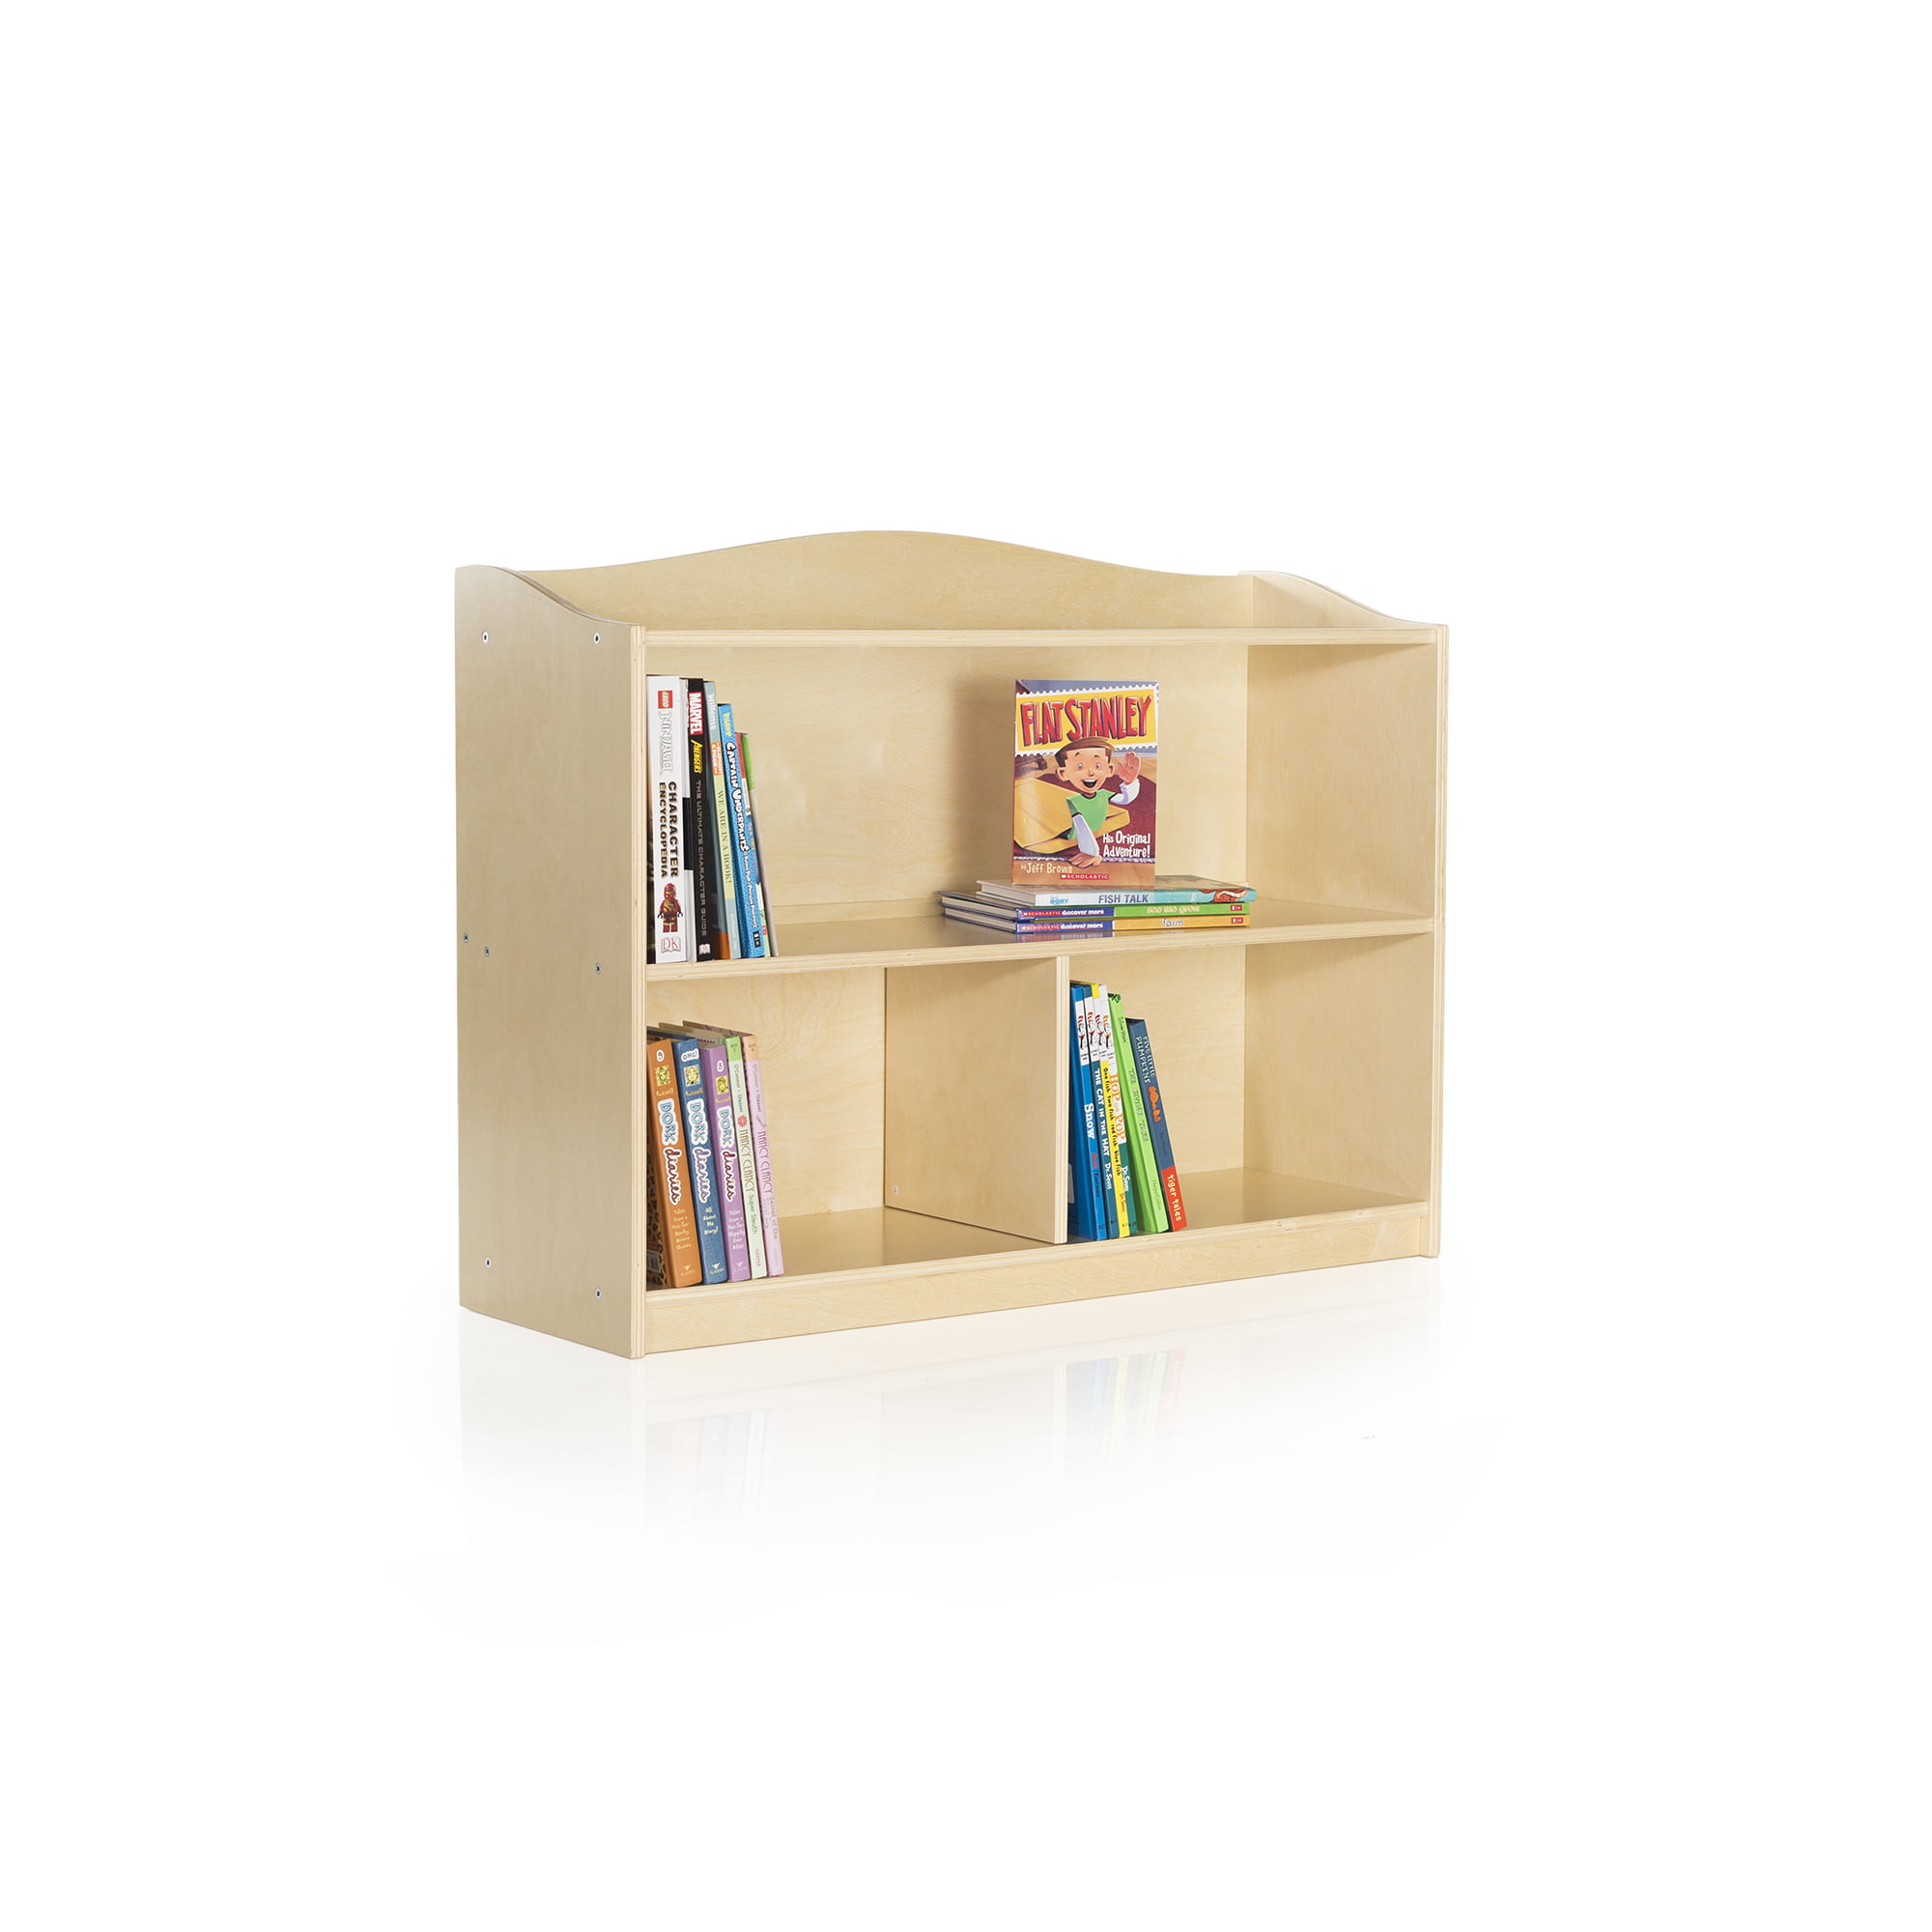 Natural 3 Storage Shelves Shelving Units and Storage GREENGUARD Gold Certified Wooden Bookshelf Organizer for Kids ECR4Kids 36” H Birch Bookcase with Adjustable Shelves 